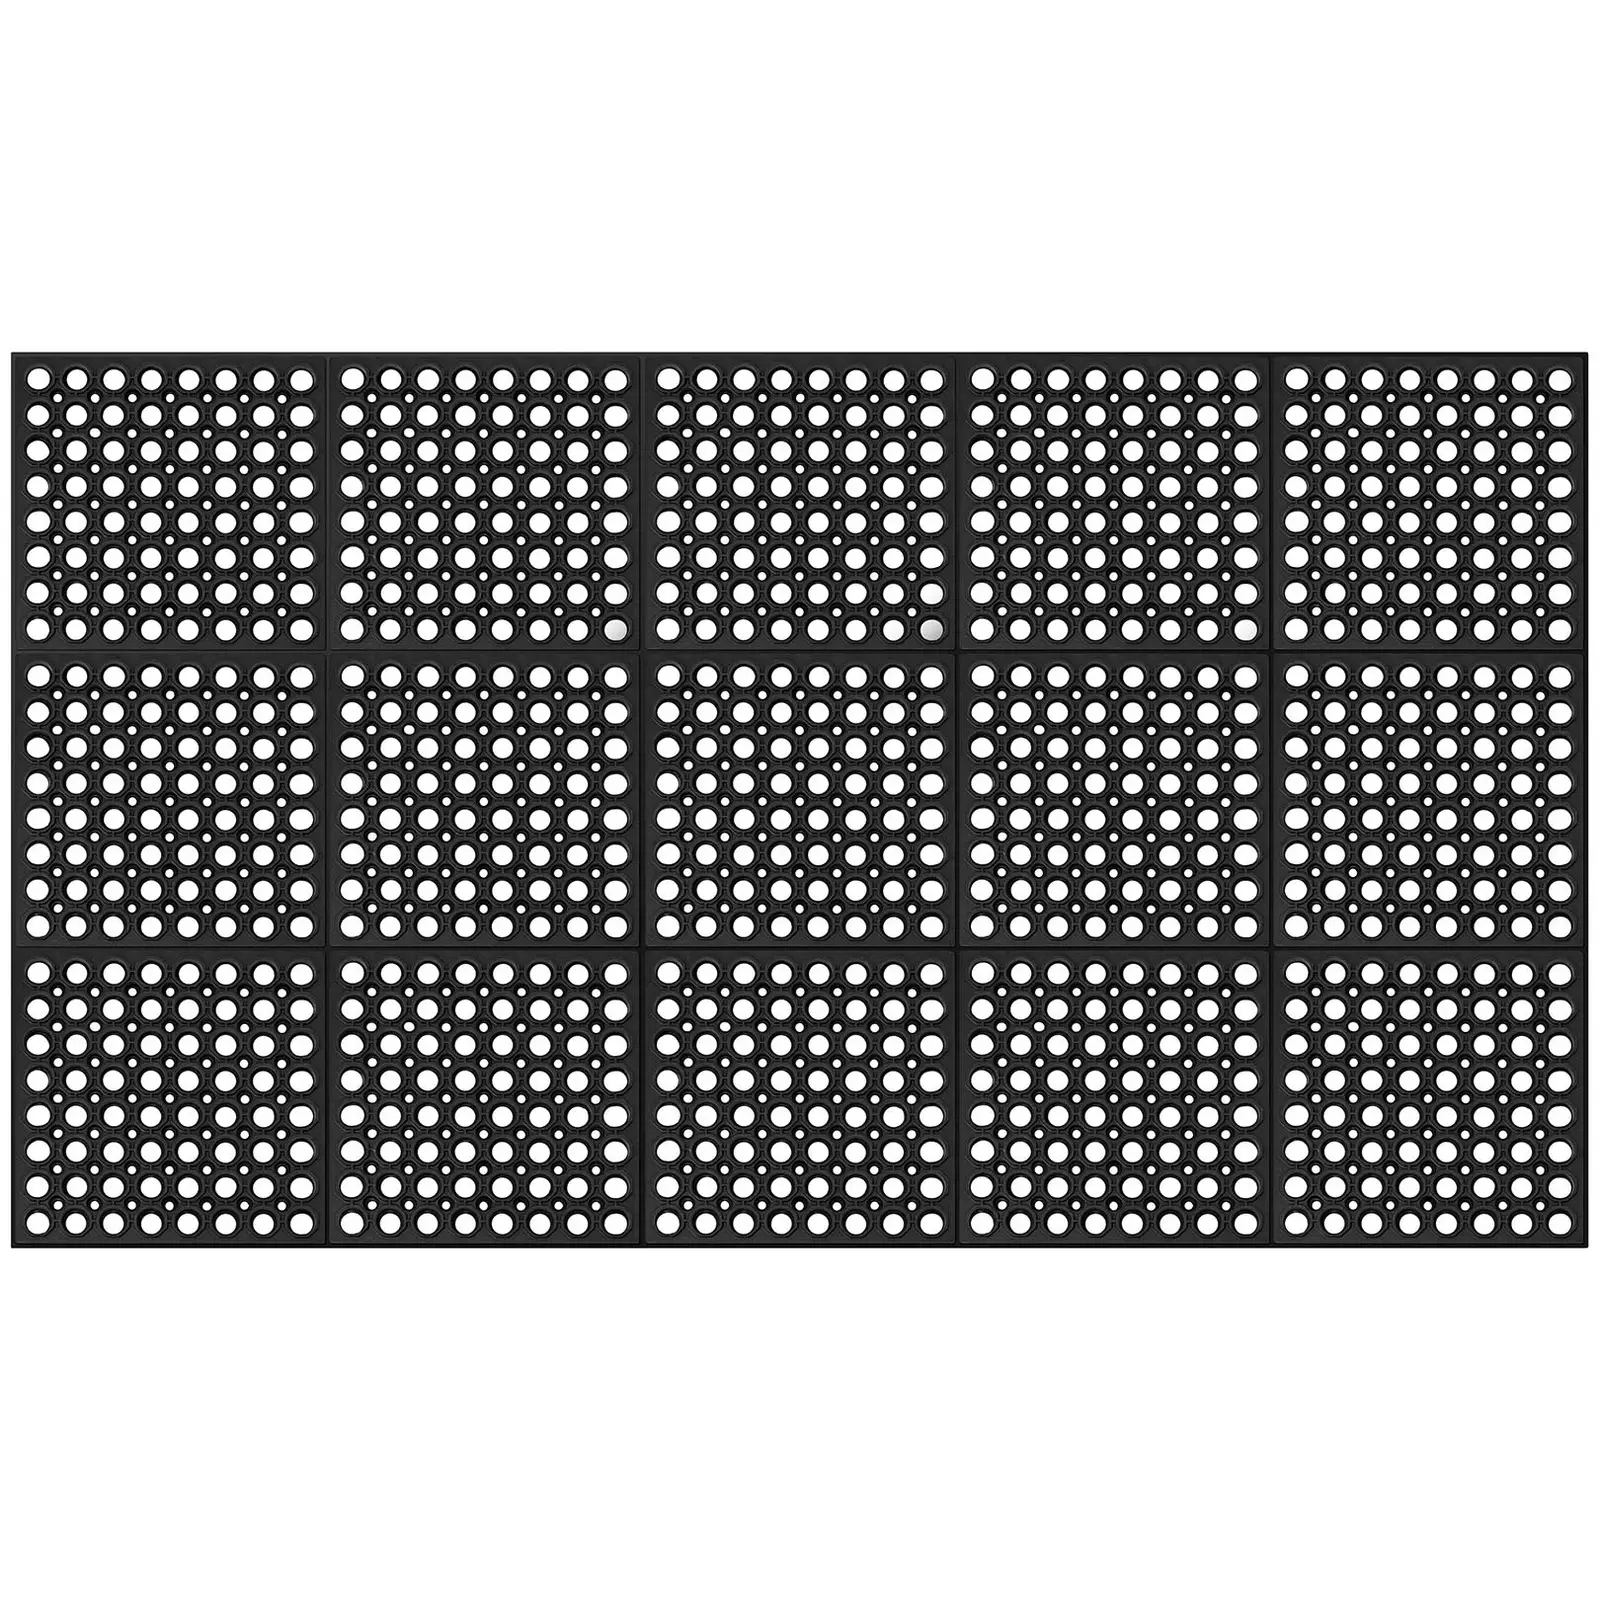 Ringgummimatte - 150 x 90 x 1 cm - schwarz